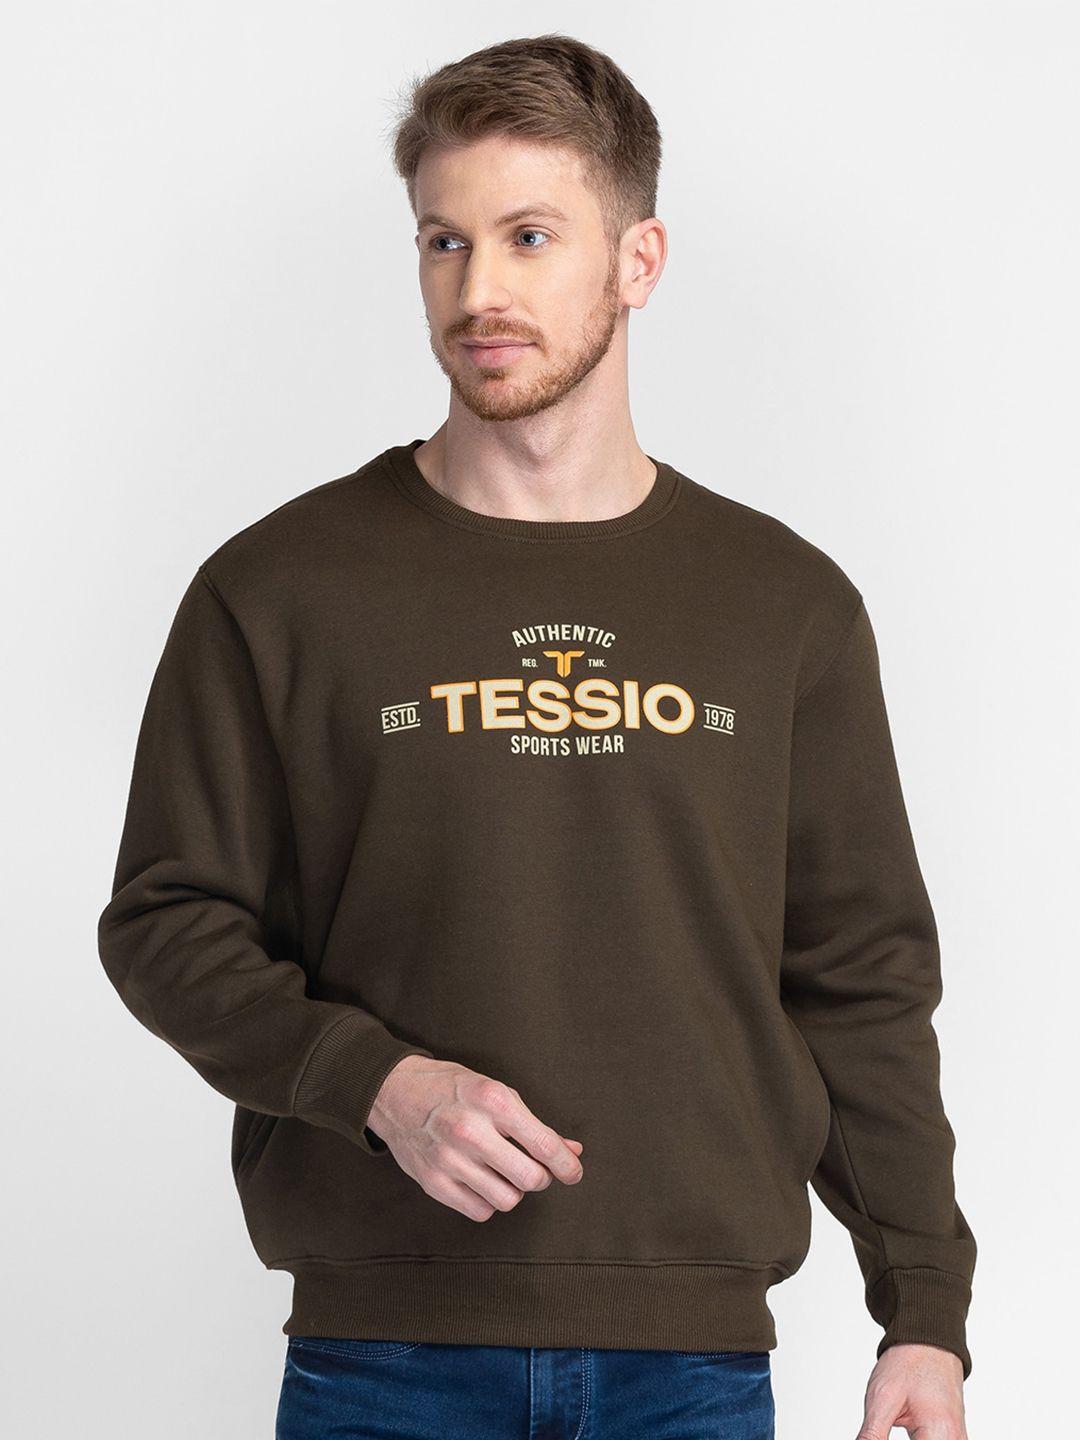 tessio-brand-logo-printed-pullover-cotton-sweatshirt